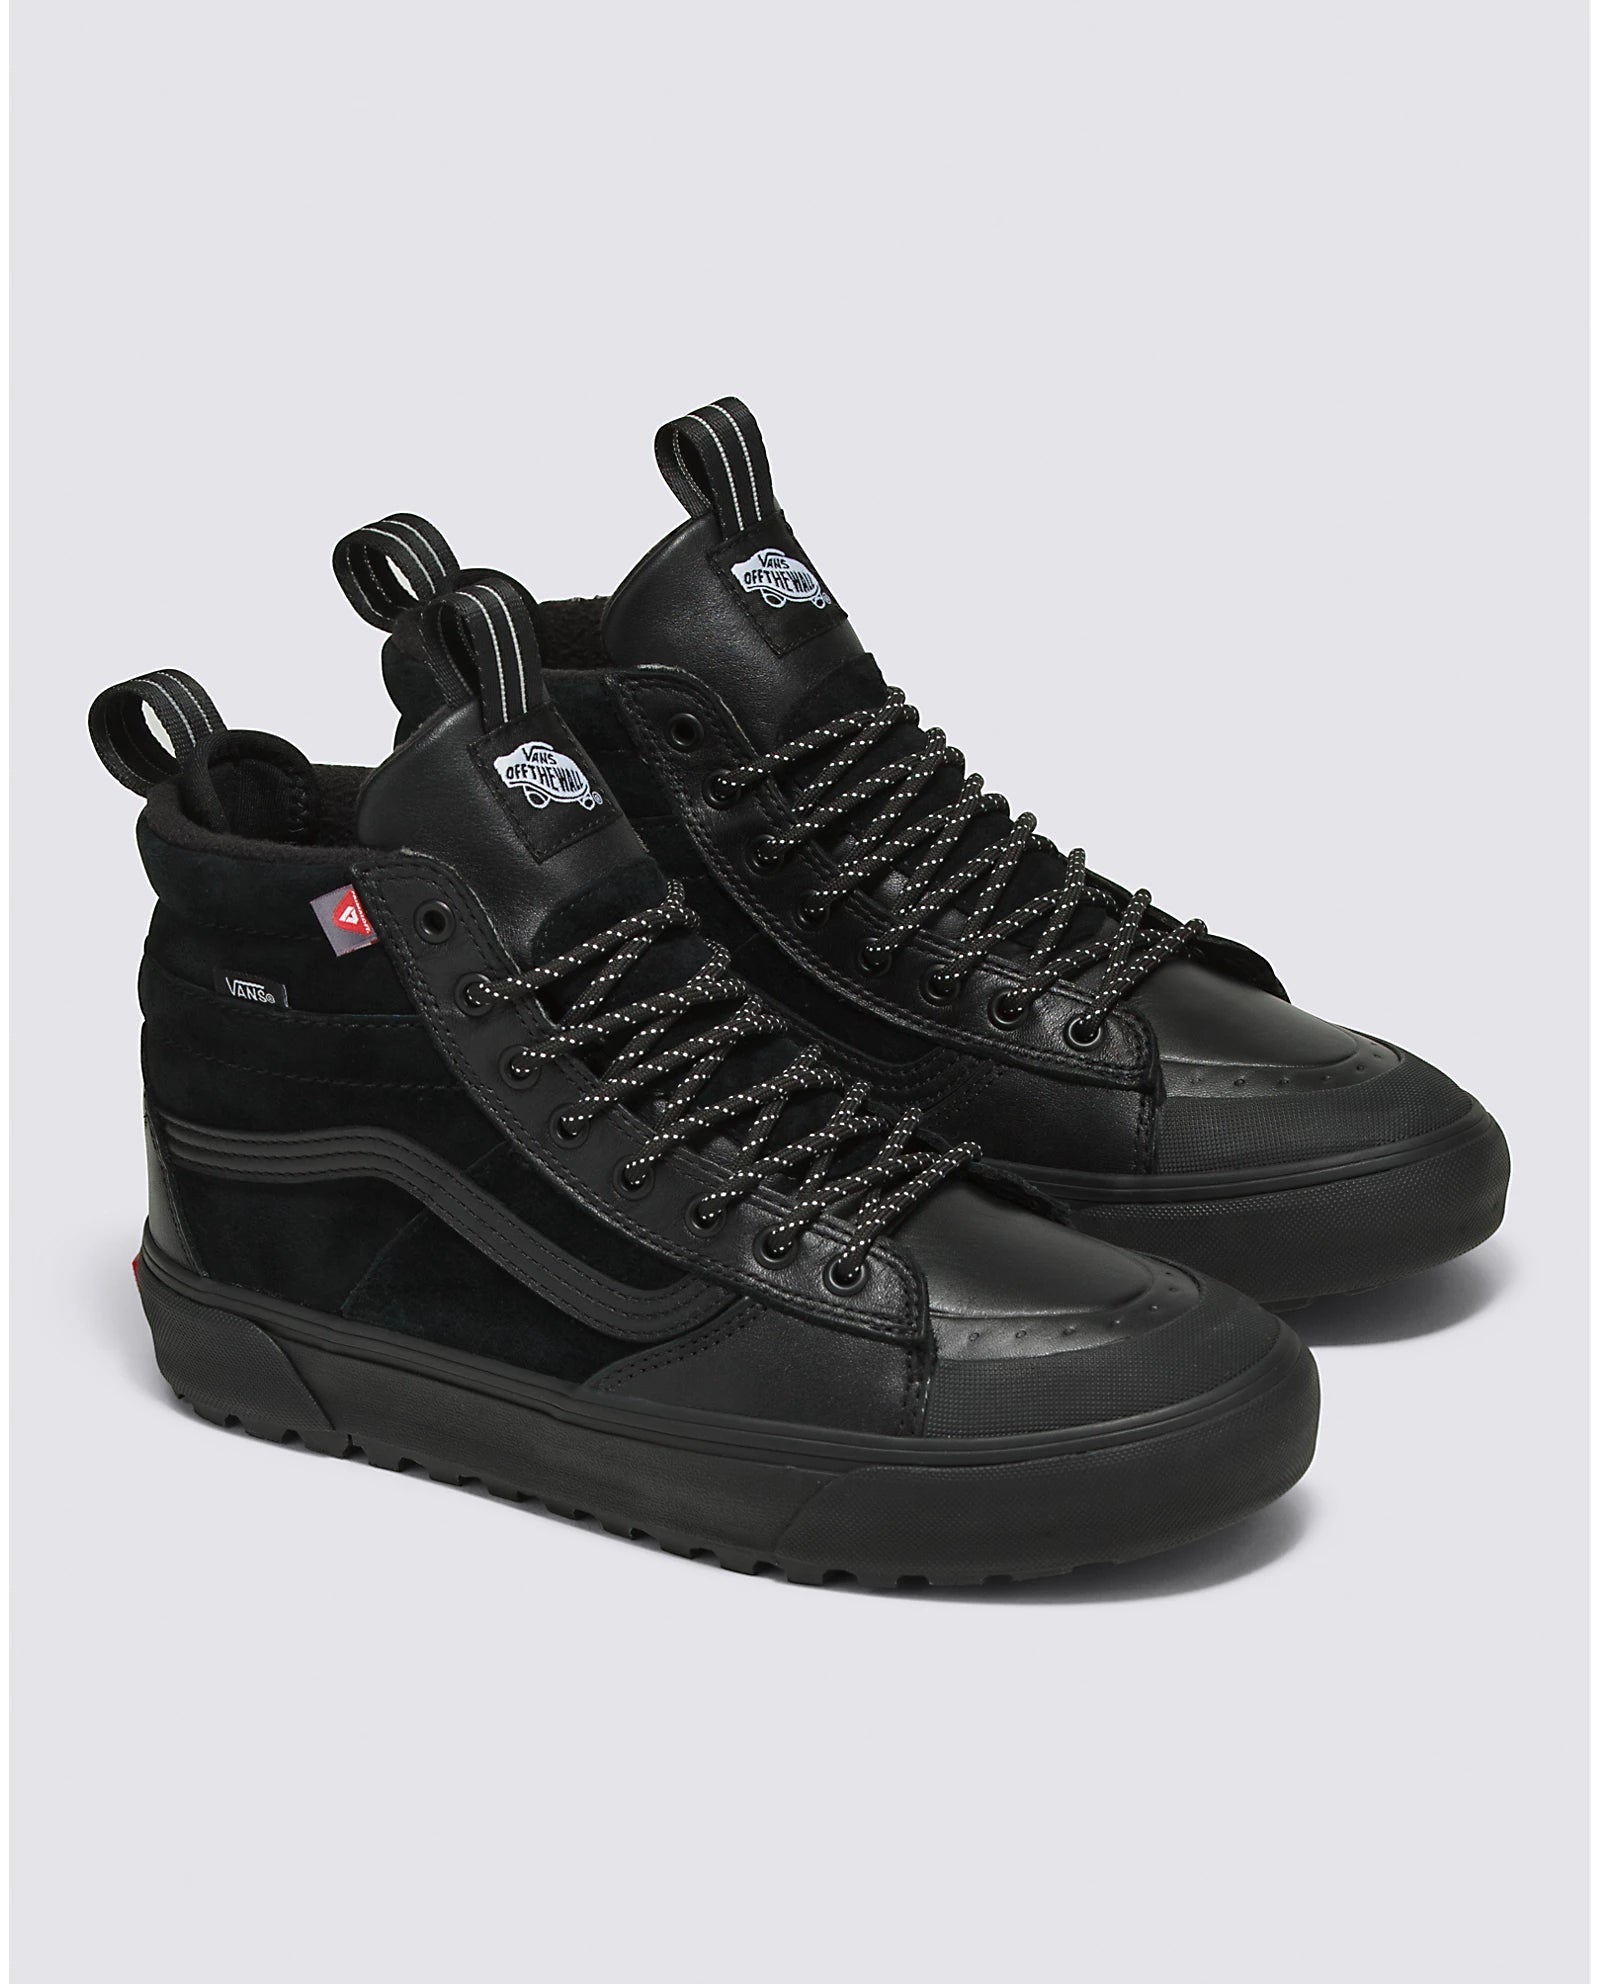 VANS SK8-Hi MTE-2 Shoe Black/Black Men's Skate Shoes Vans 